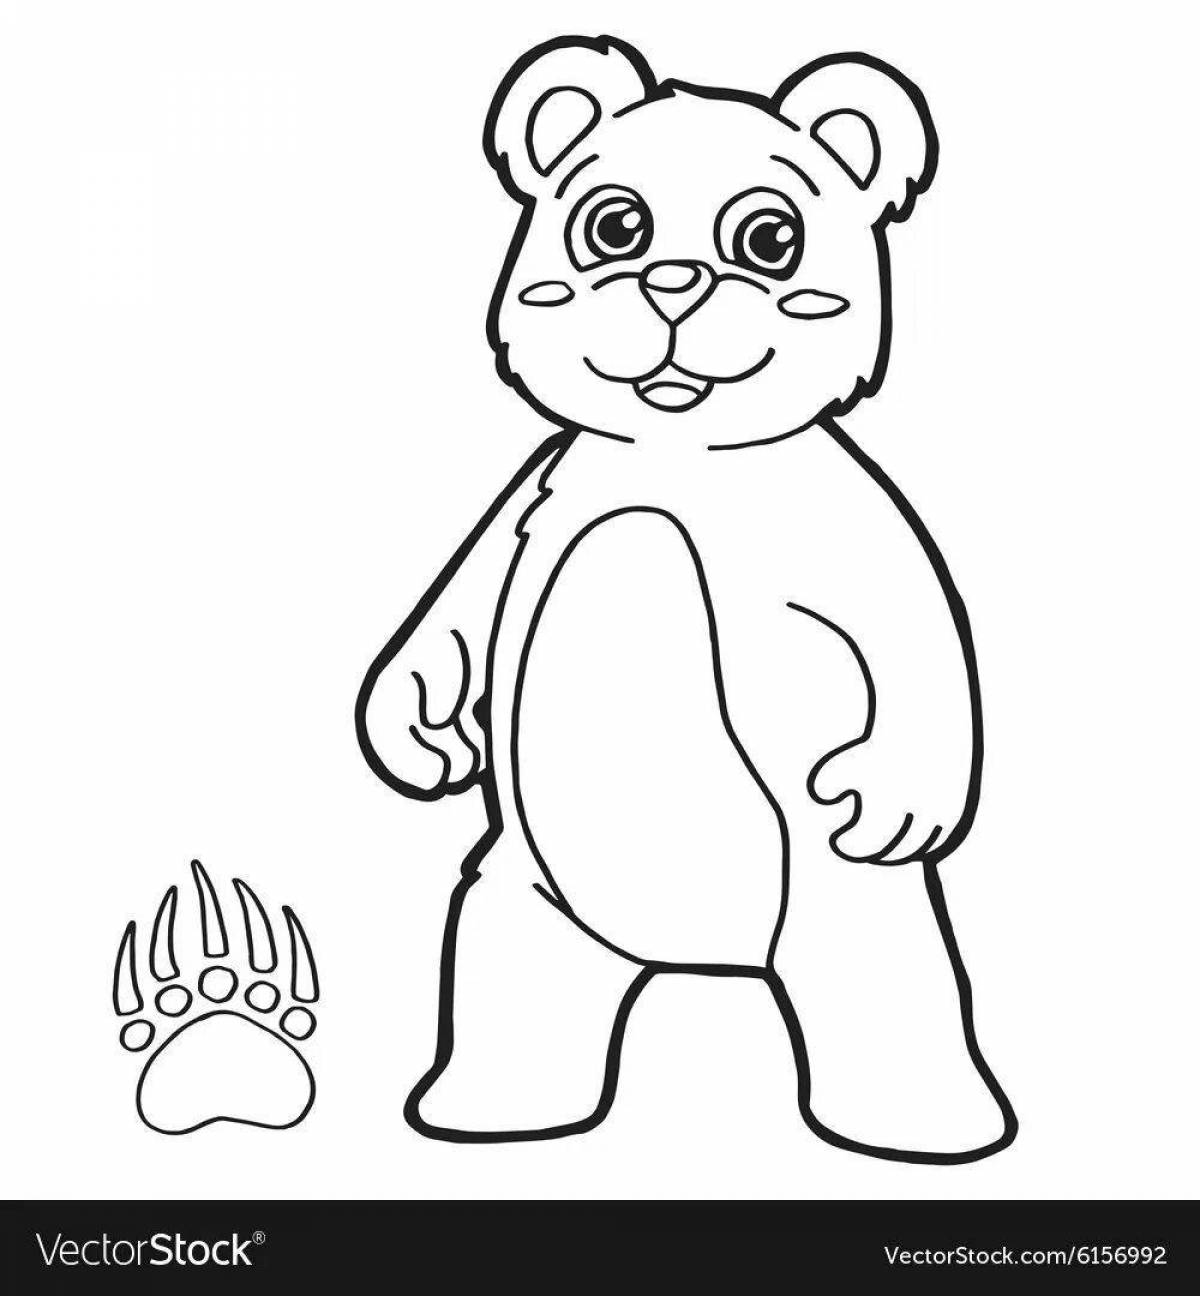 Coloring funny teddy bear kolobok